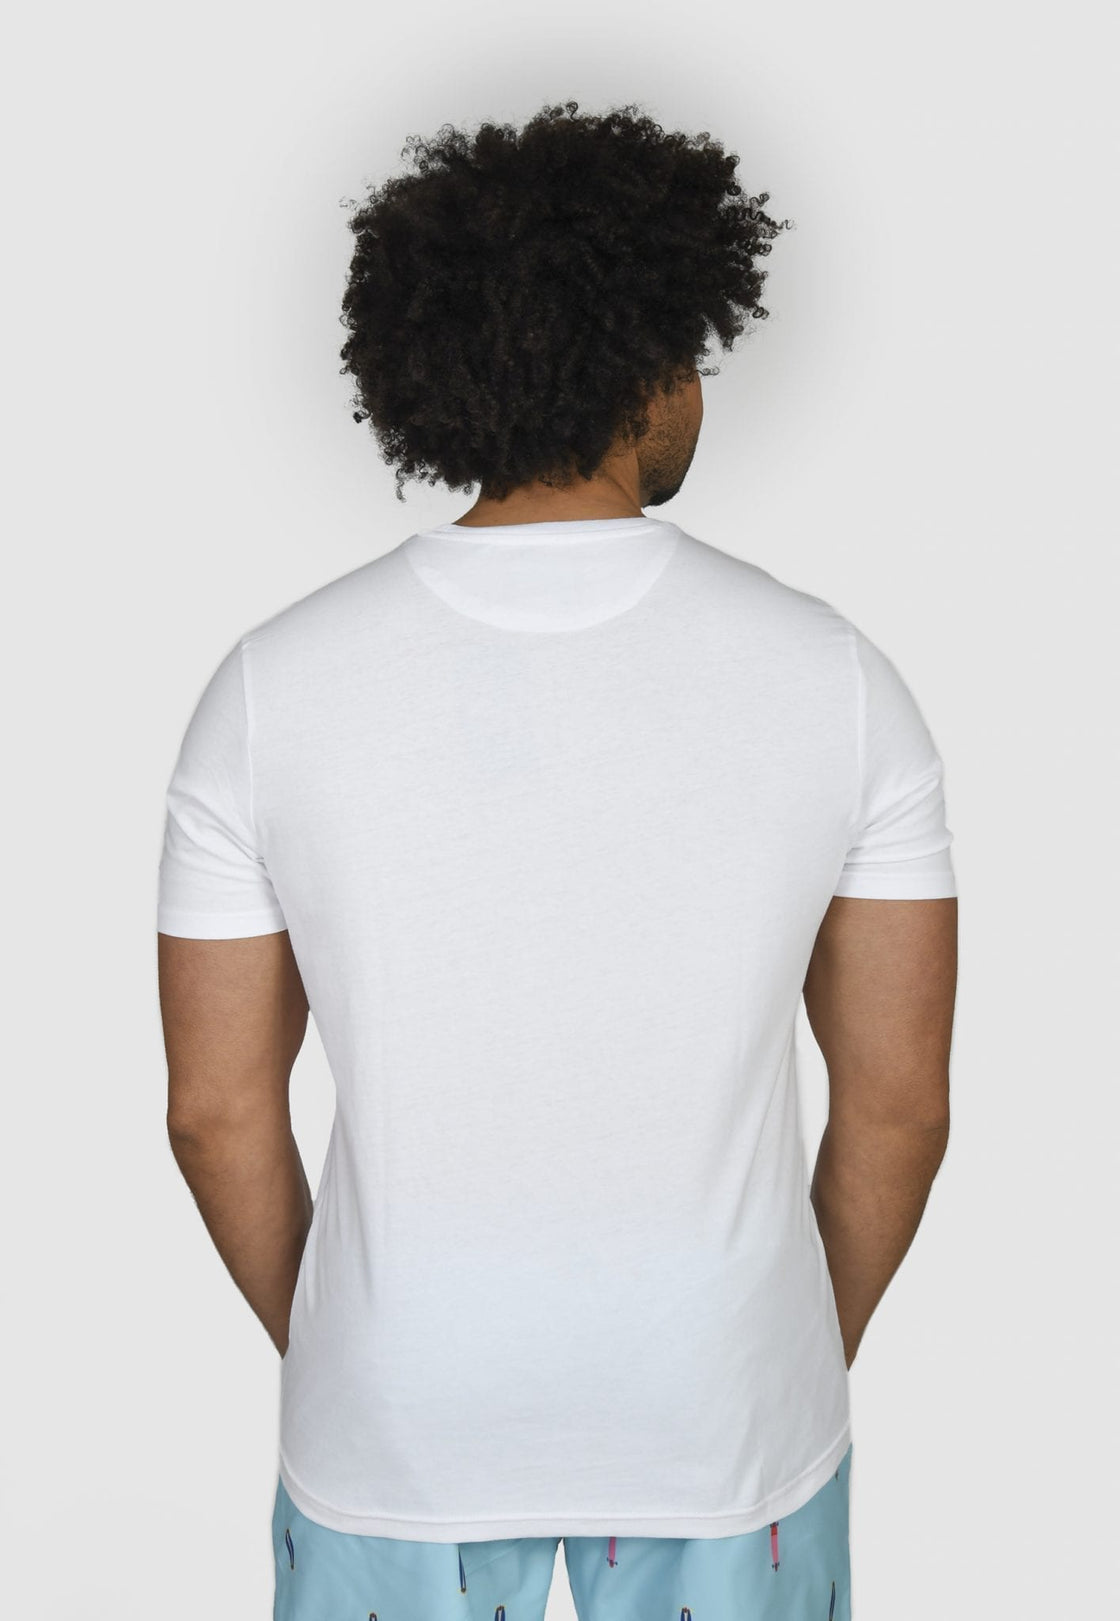 Longboard T-shirt